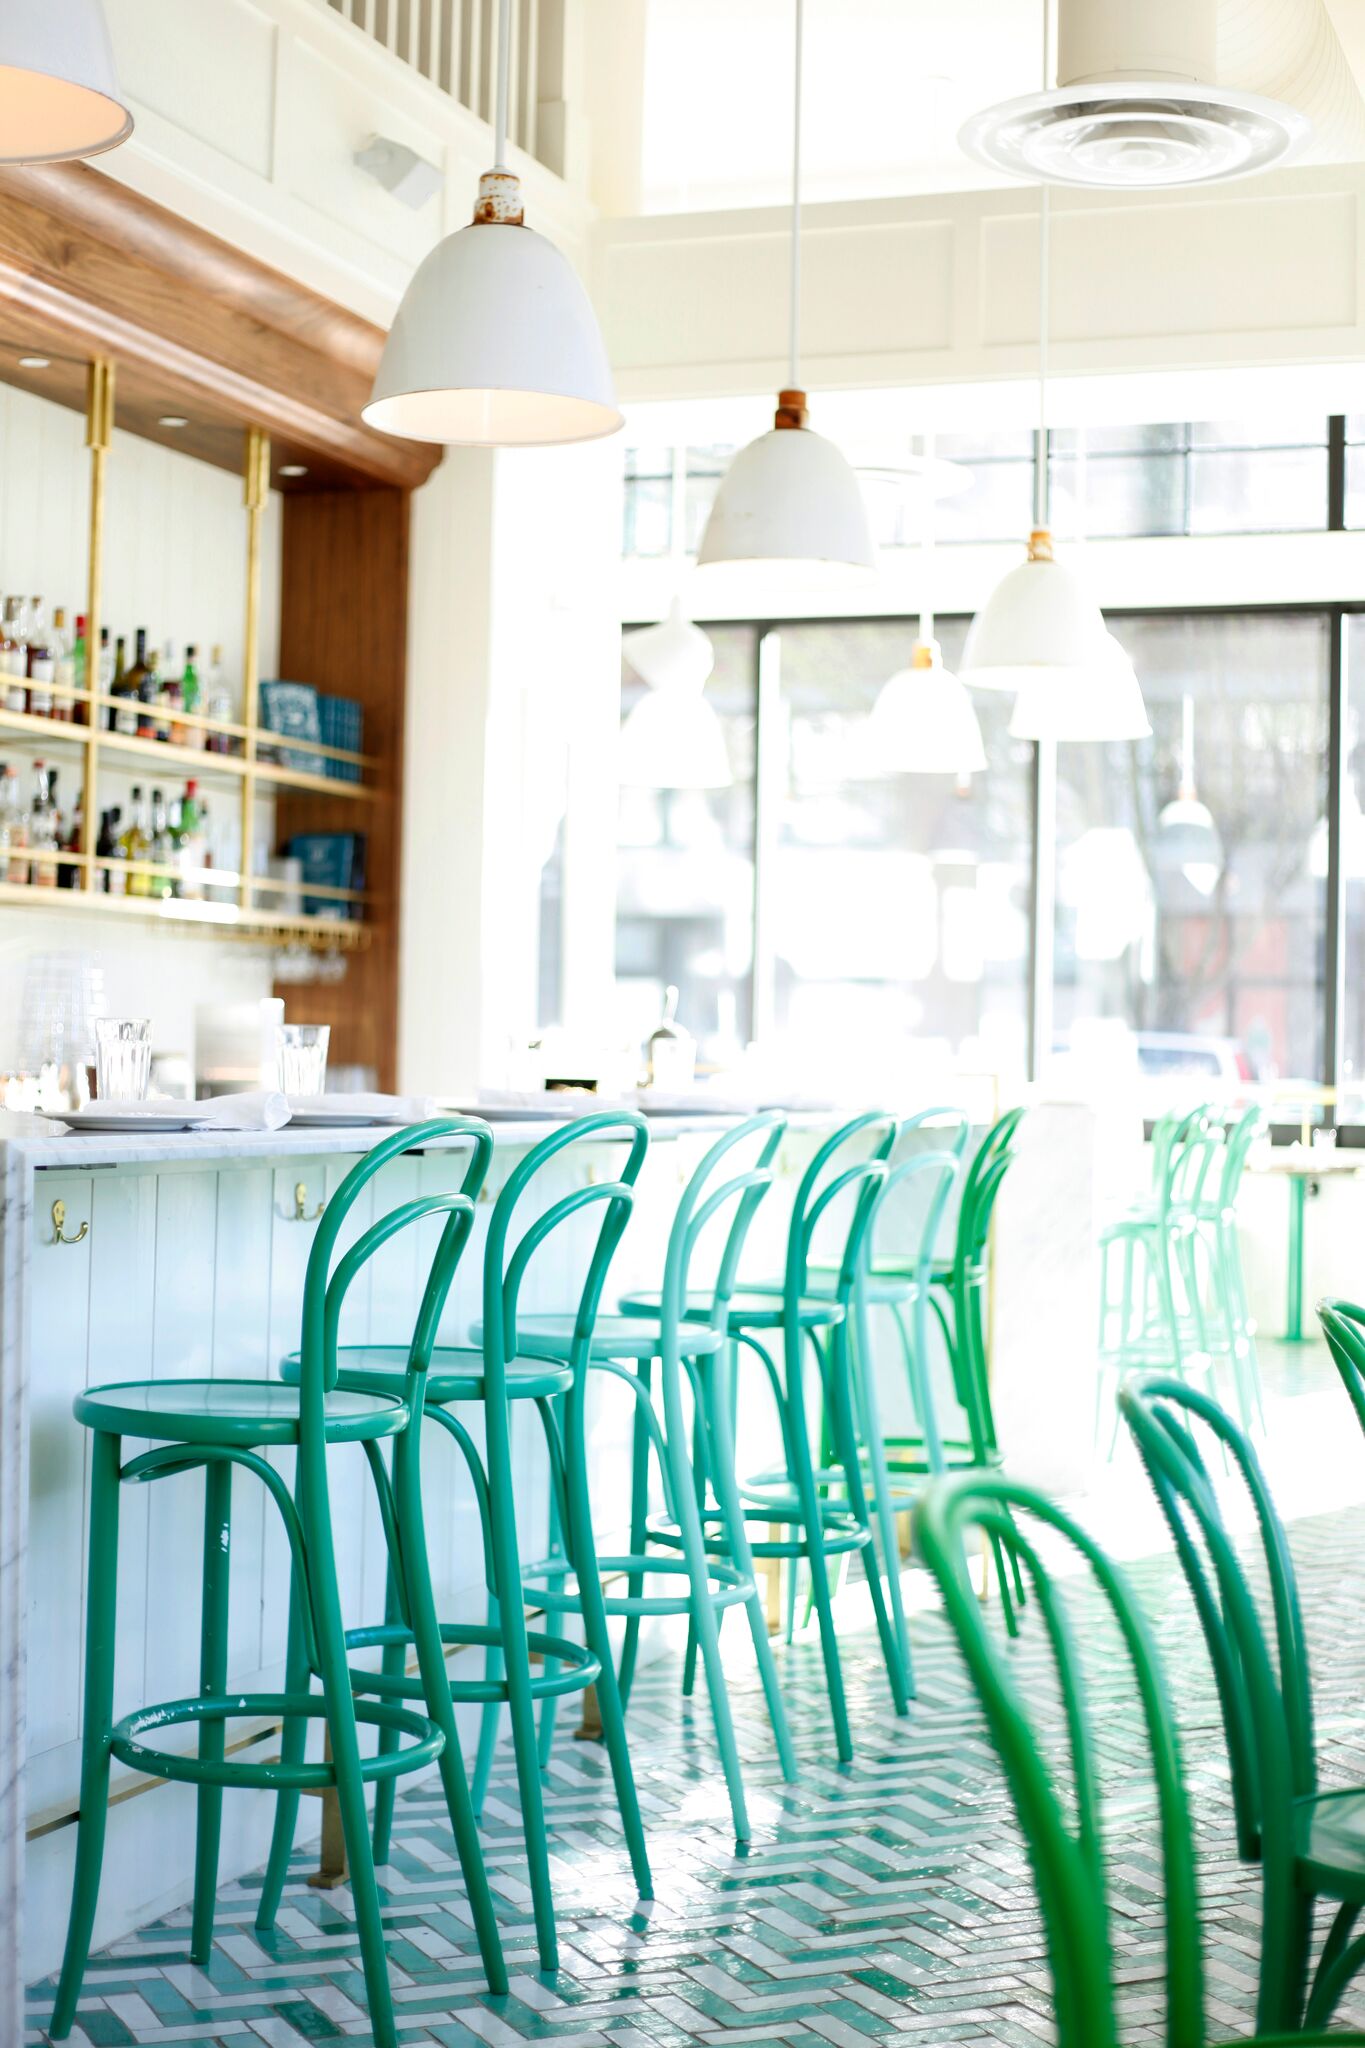 tour this gorgeous green and white bar in seattle | bar melusine via coco kelley